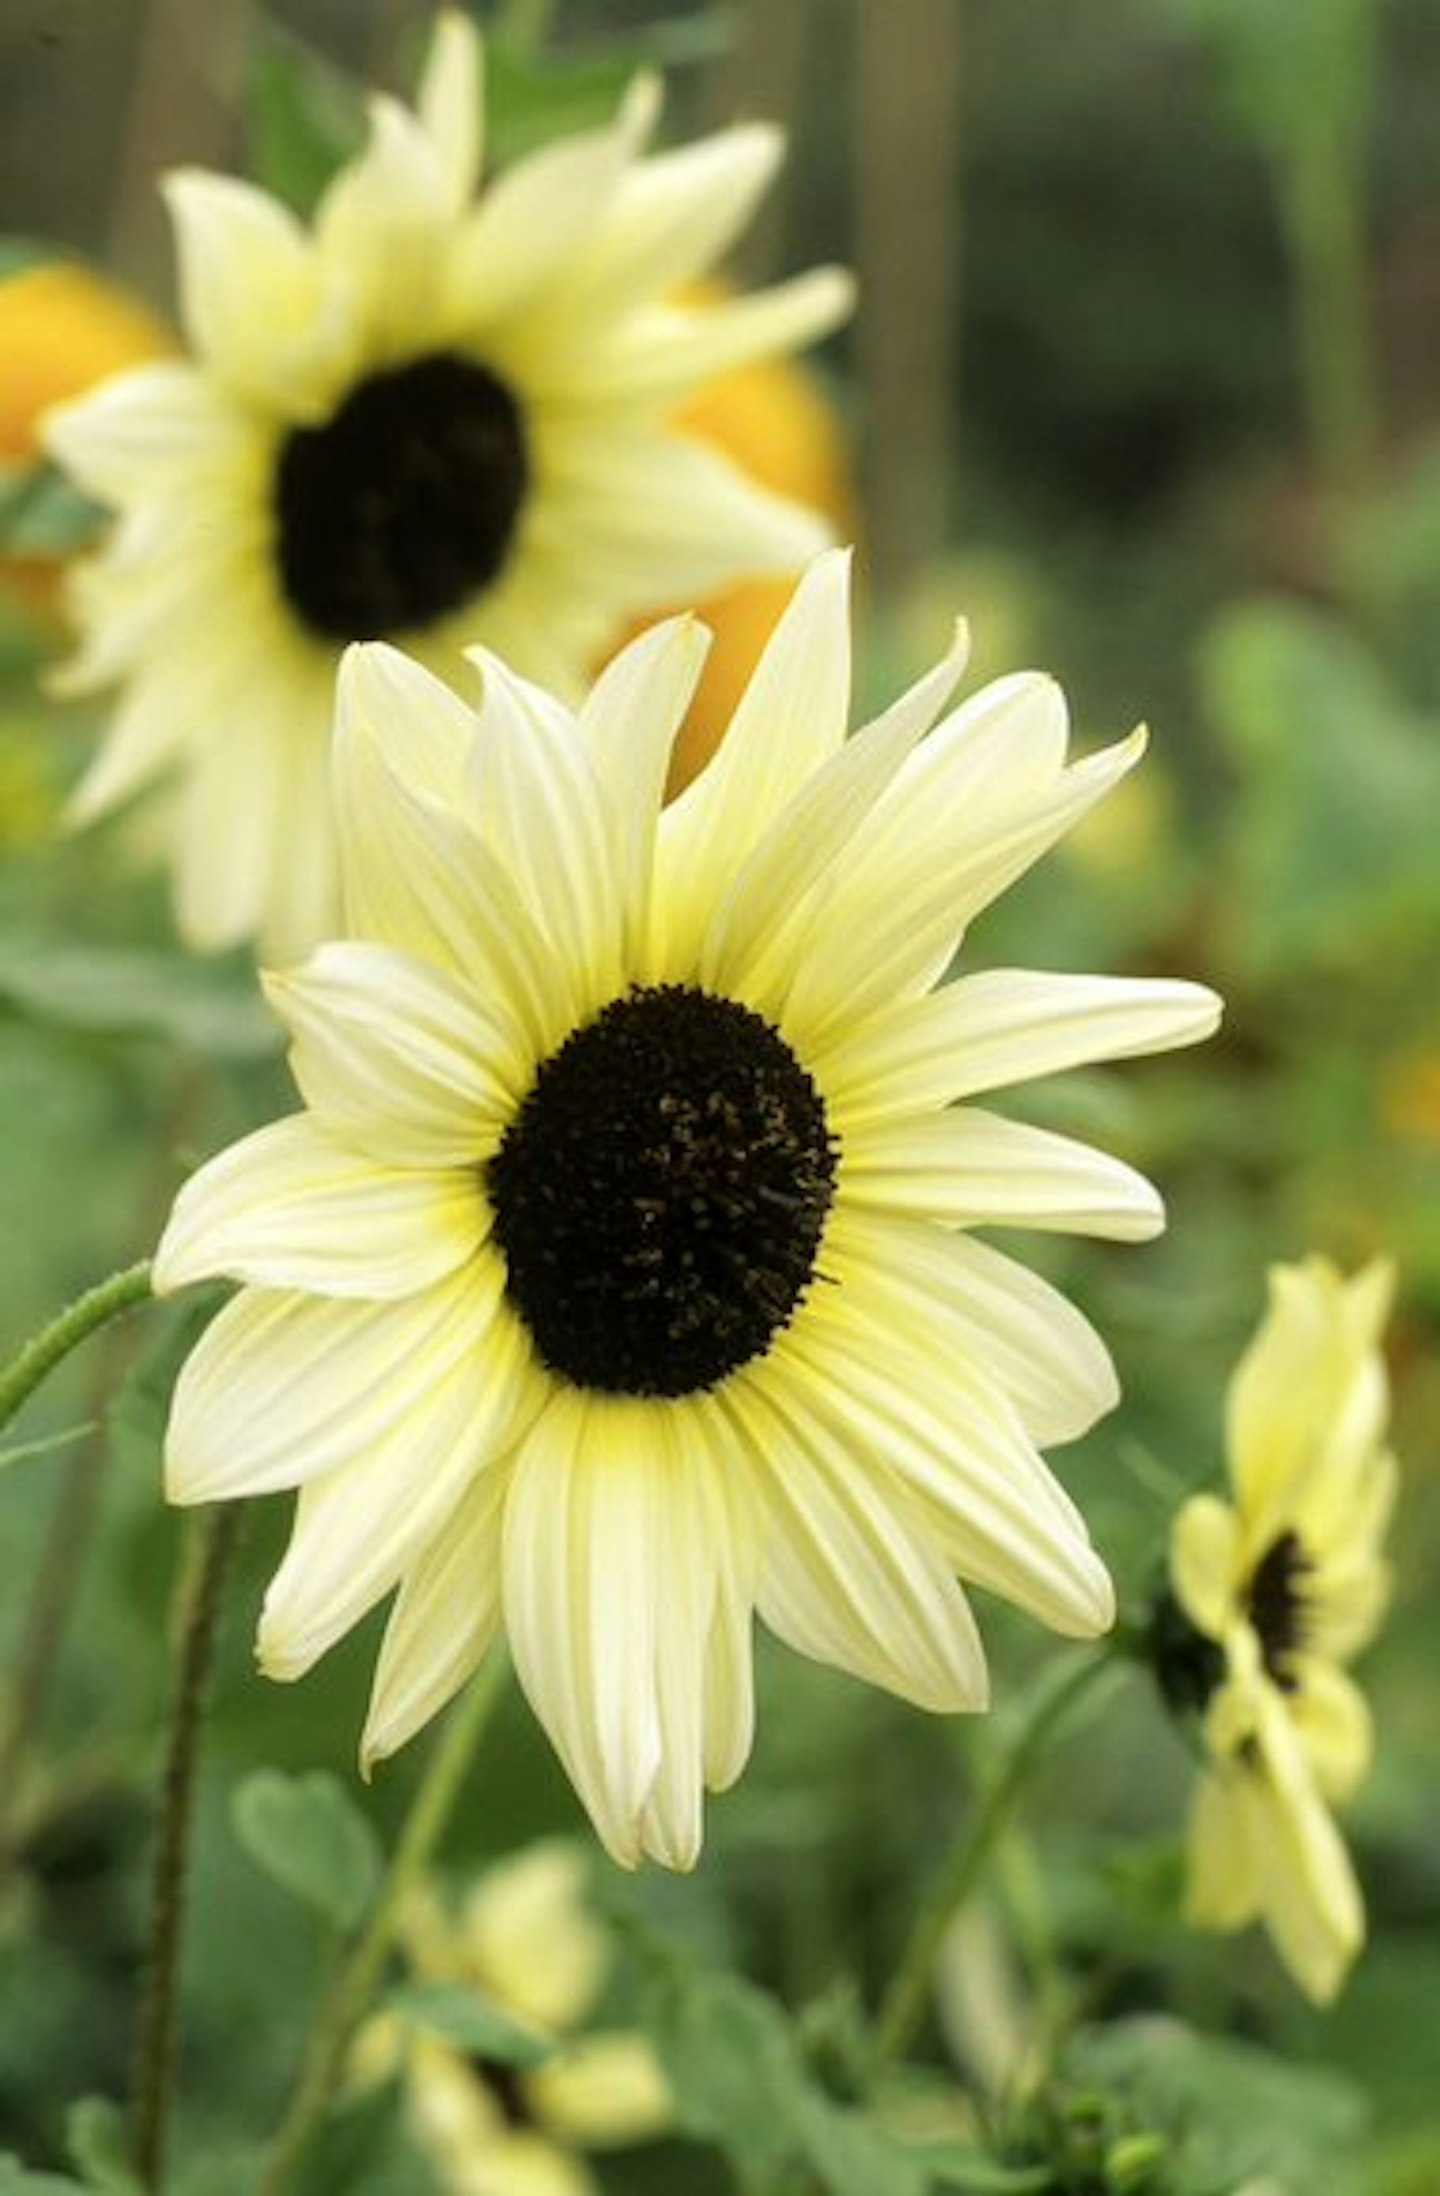 Pale yellow sunflower